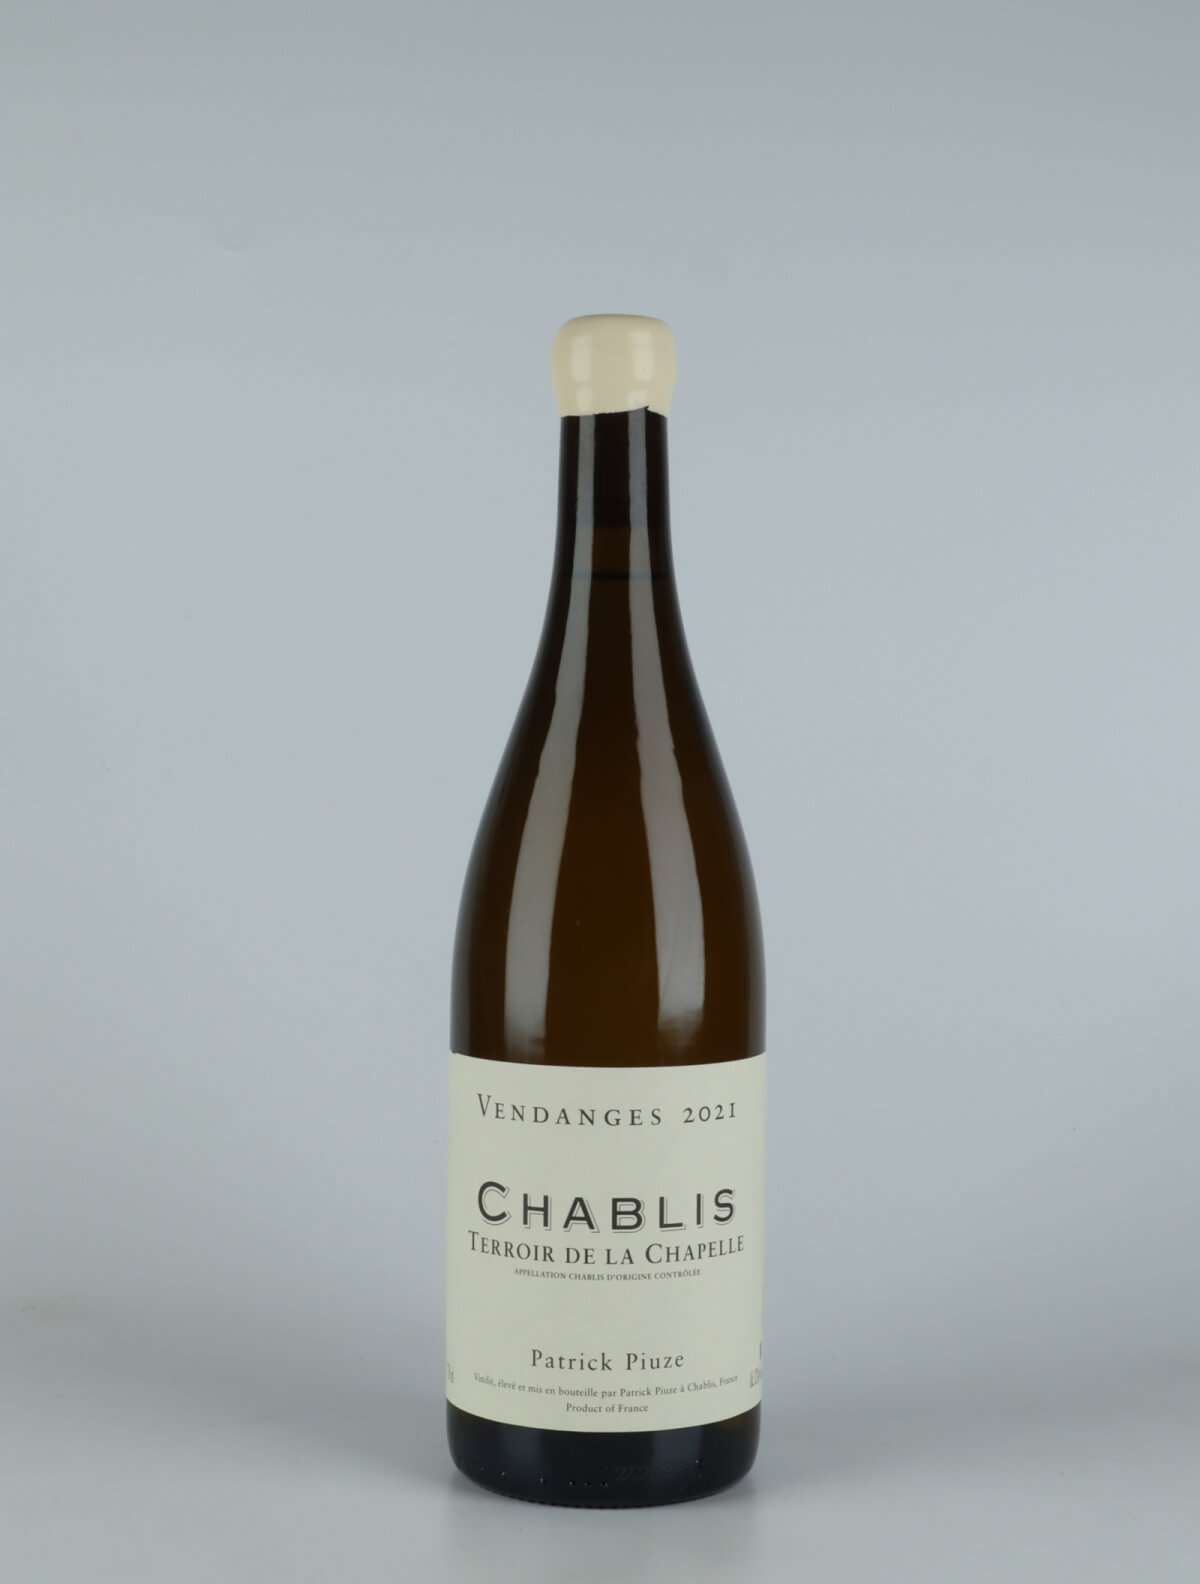 A bottle 2021 Chablis - Terroir de la Chapelle White wine from Patrick Piuze, Burgundy in France